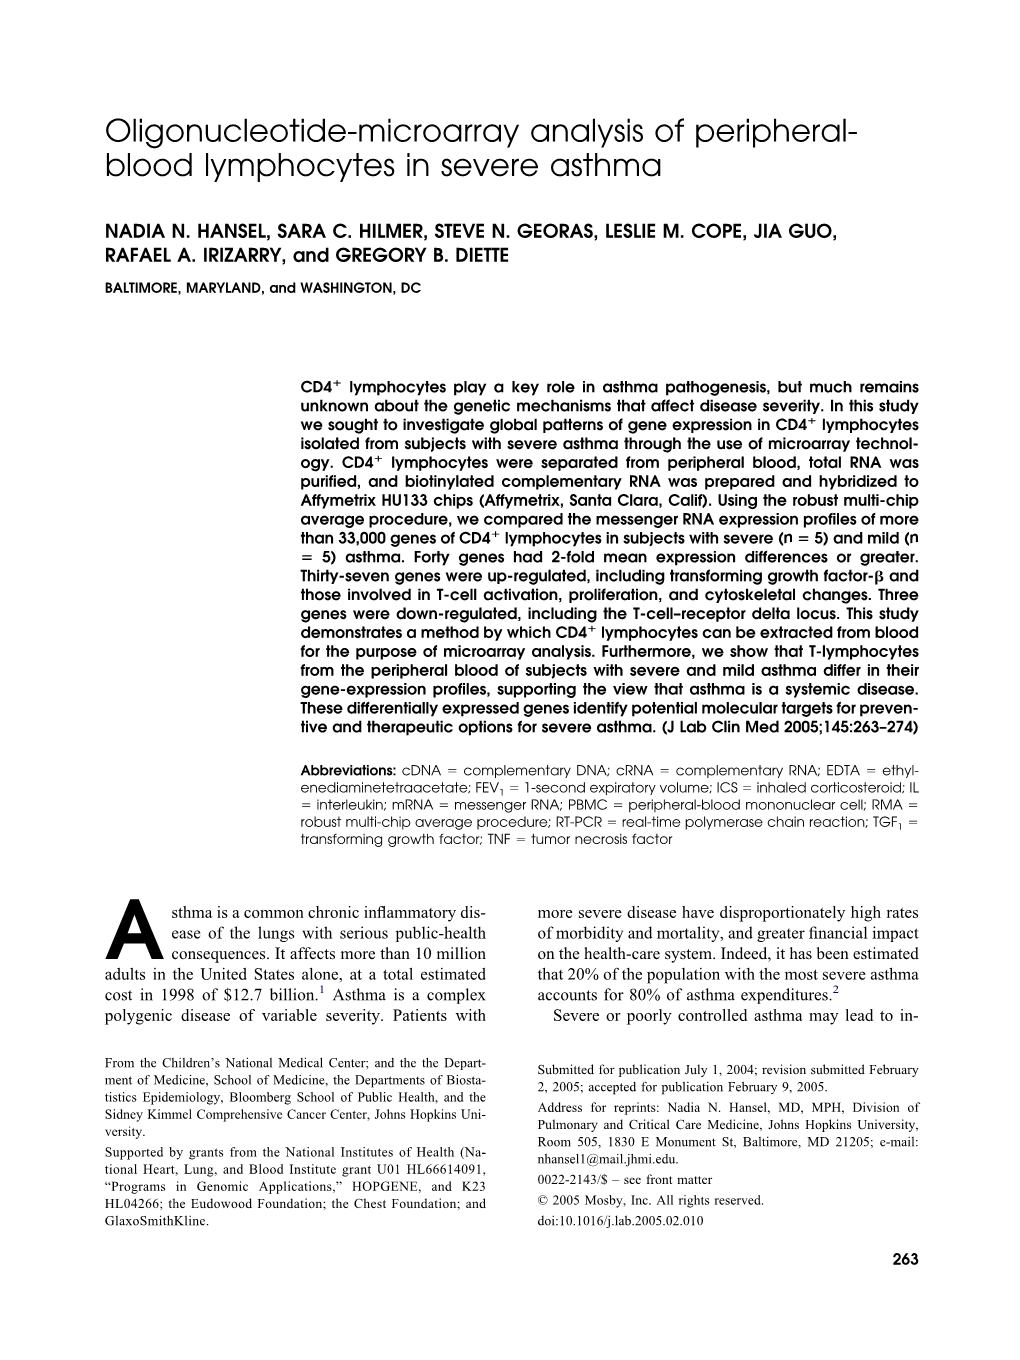 Oligonucleotide-Microarray Analysis of Peripheralblood Lymphocytes In